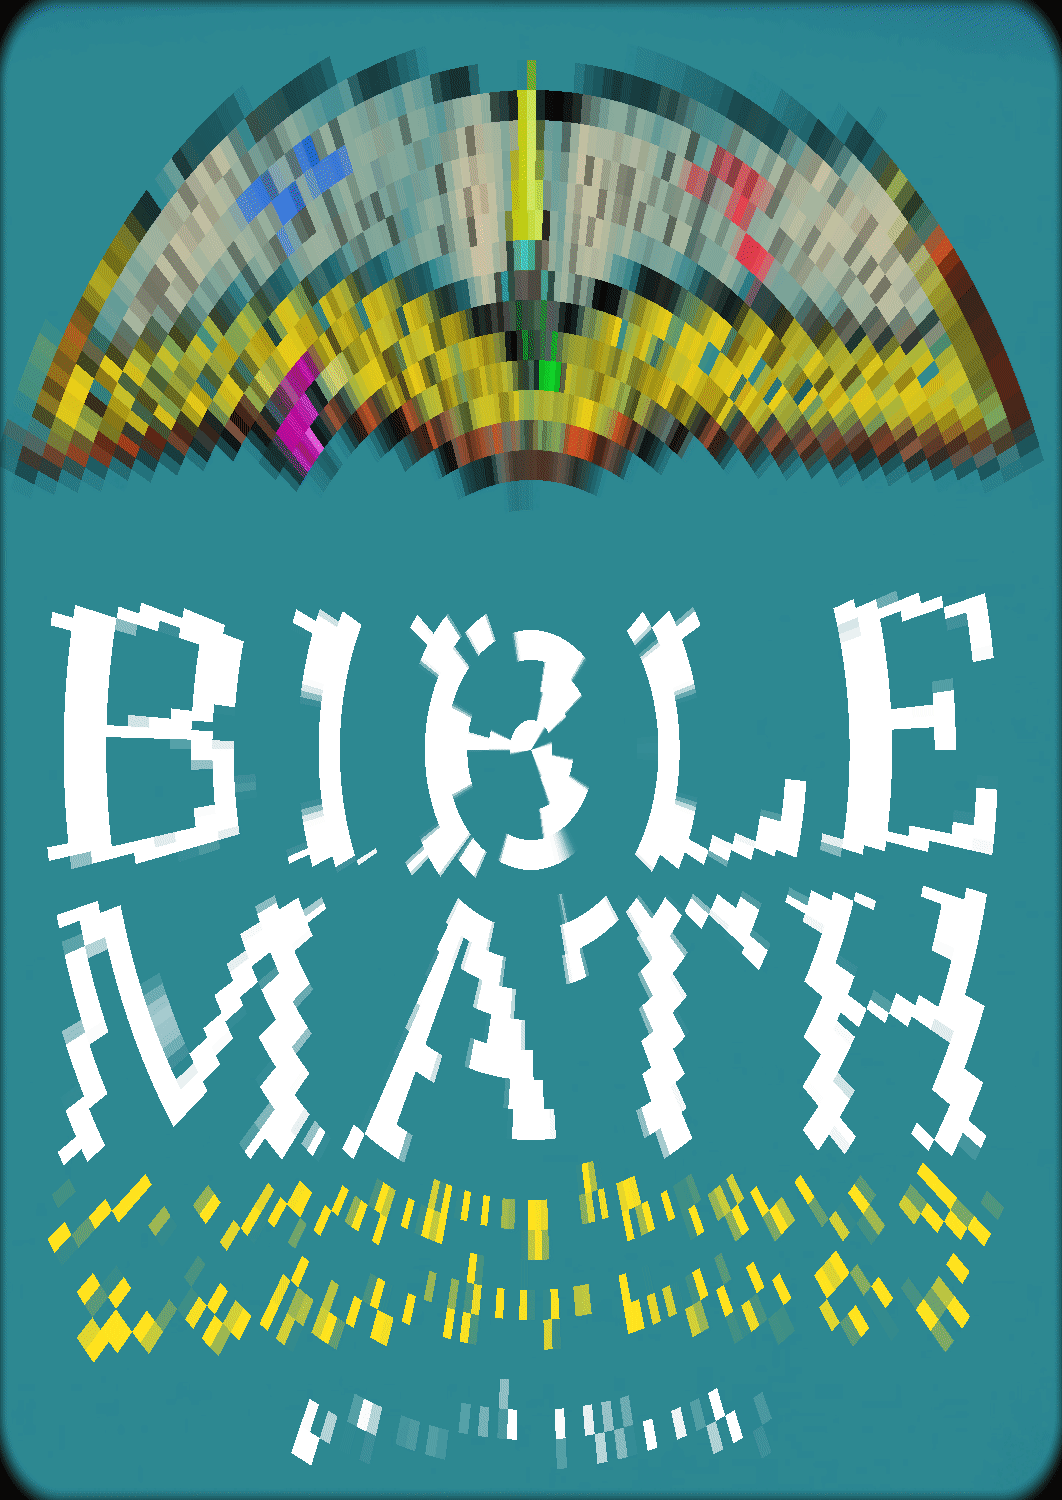 Bible Math Greco Cover is rare digital art by Joe Chiappetta